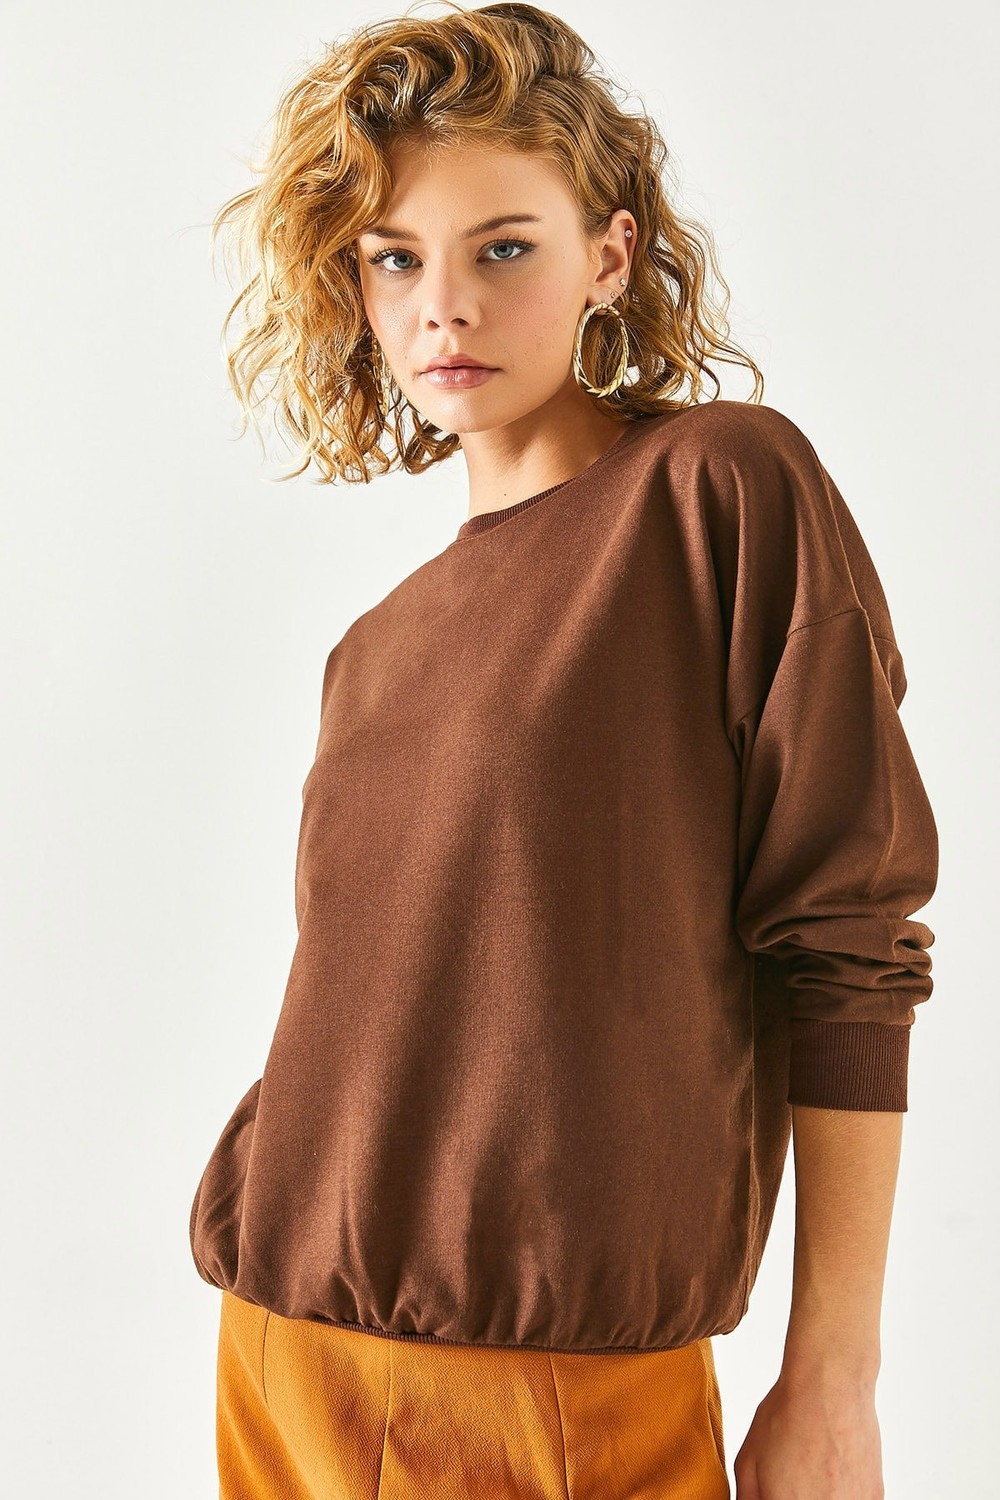 Olalook Women's Plain Dark Brown Basic Soft Textured Loose Sweatshirt